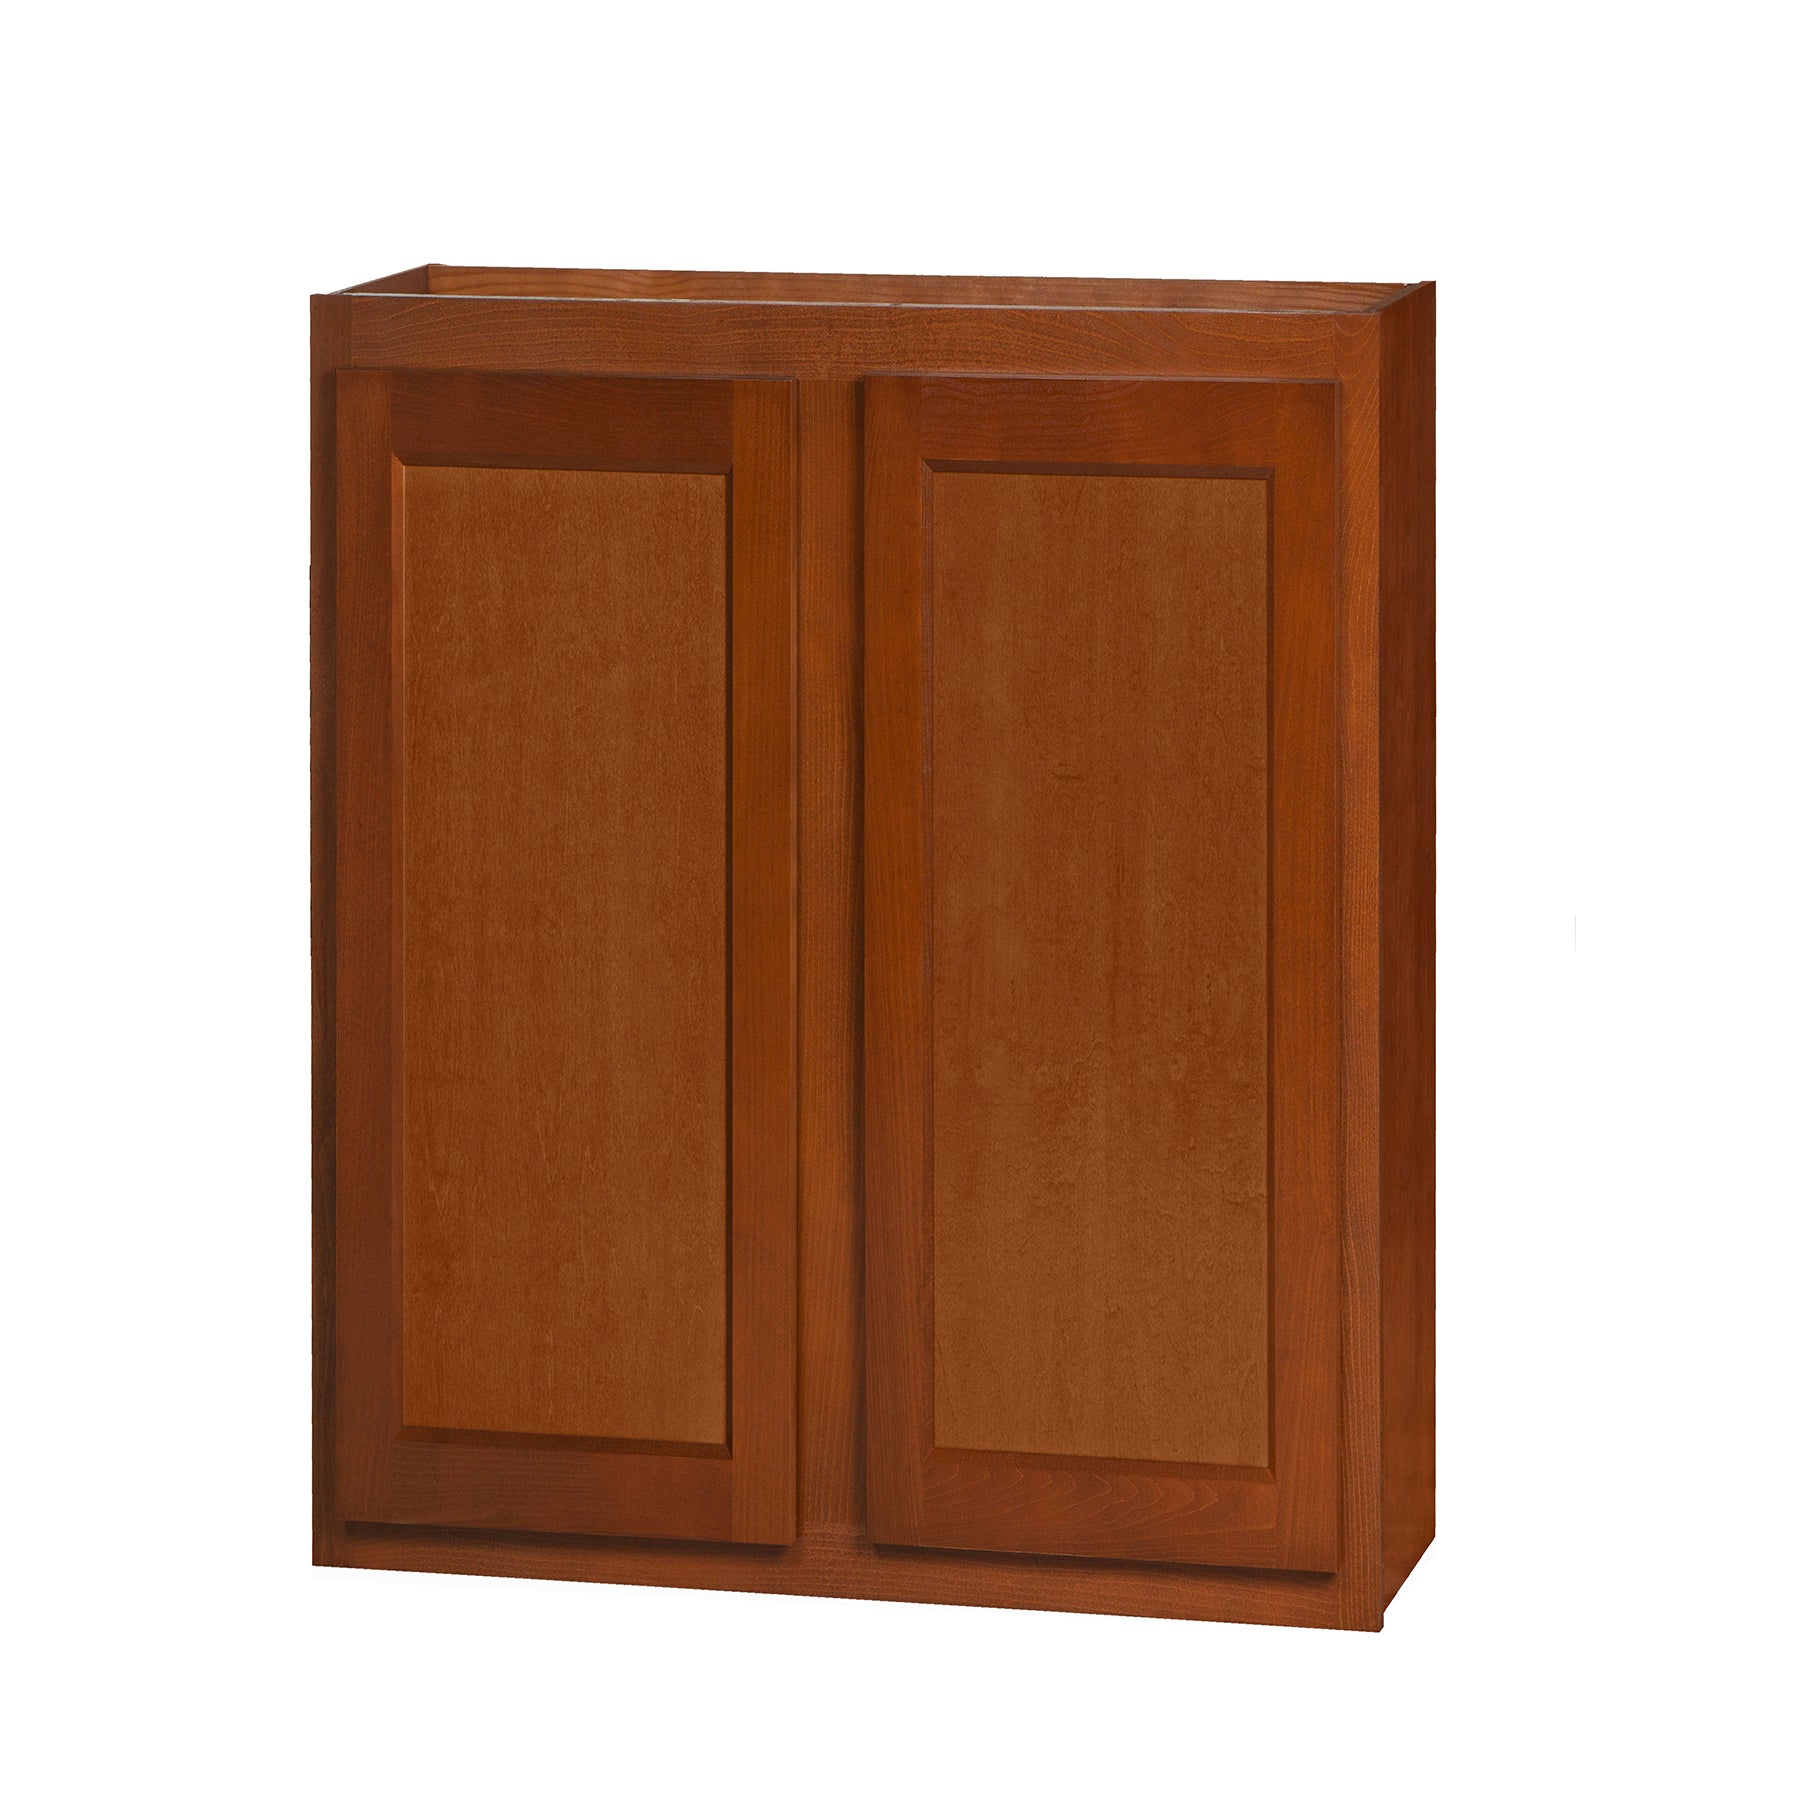 36 inch Wall Cabinets - Glenwood Shaker - 33 Inch W x 36 Inch H x 12 Inch D